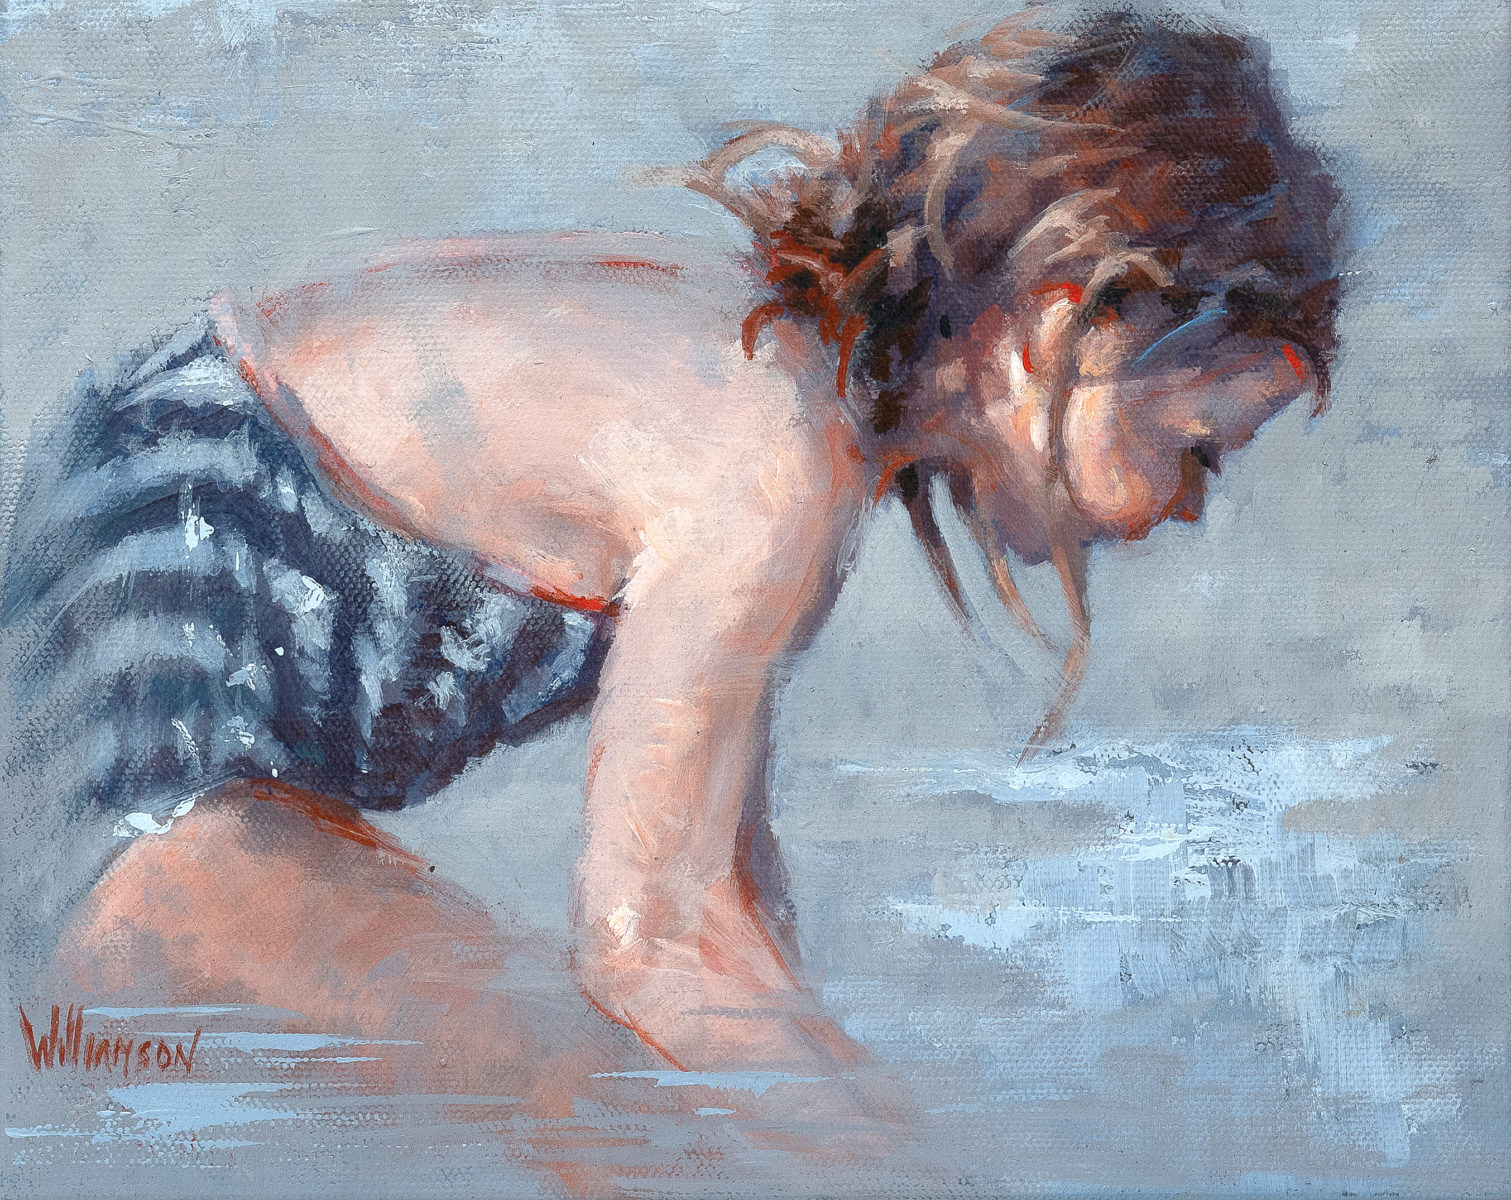 Little Swimmer | Jan Williamson | Oil on canvas | 20 x 25 cm | $1,200